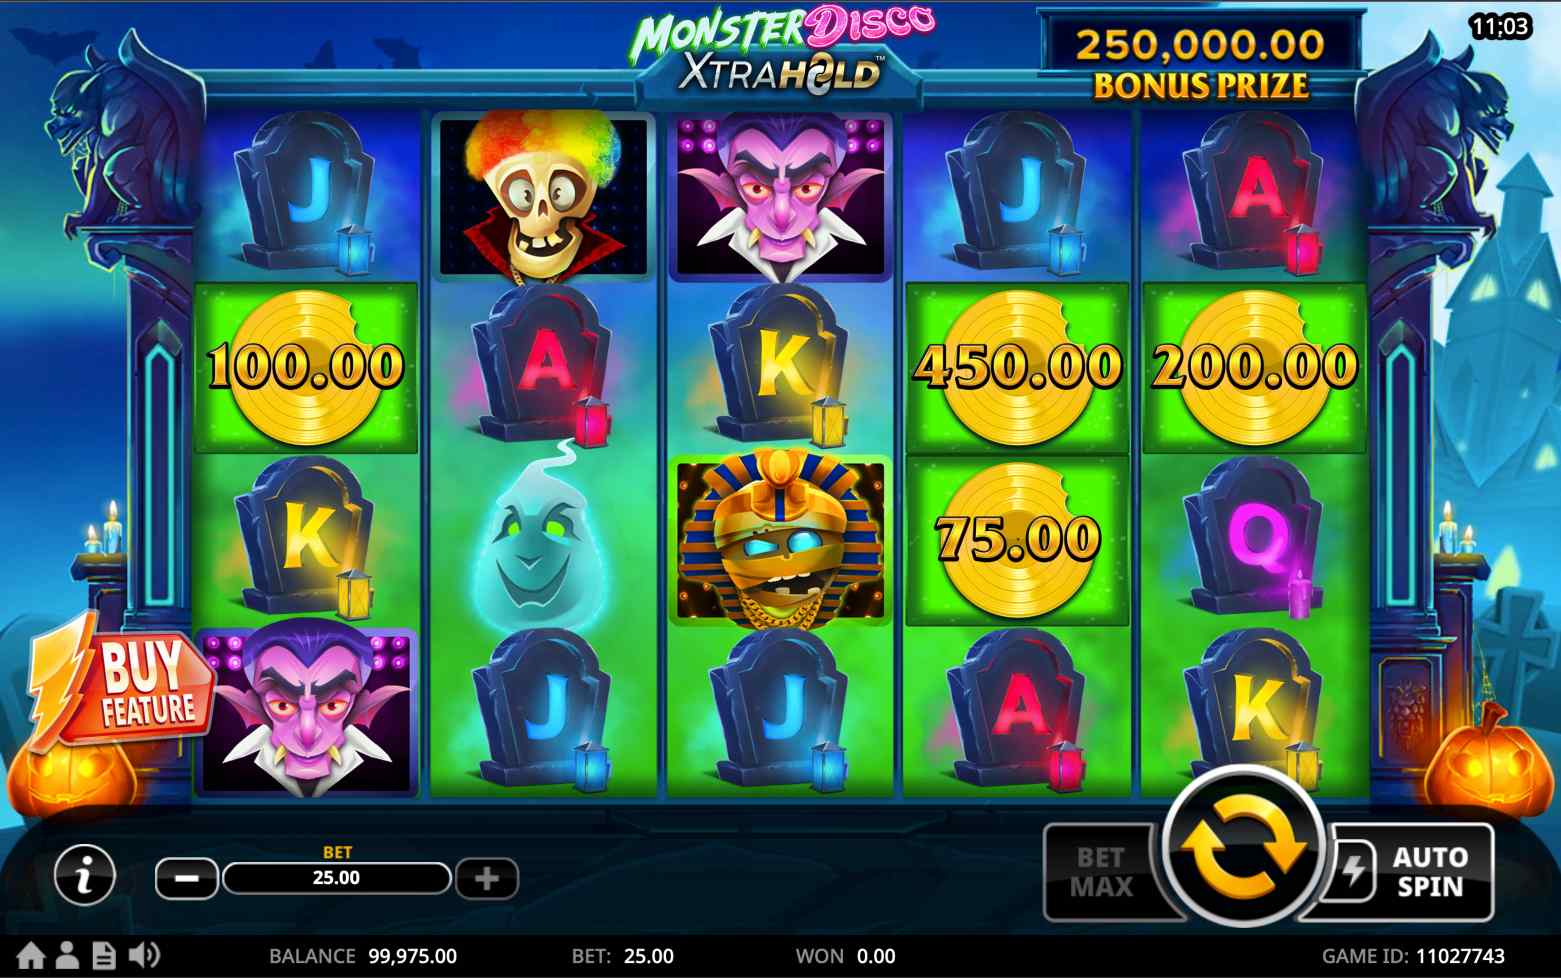 Monster Disco XtraHold™